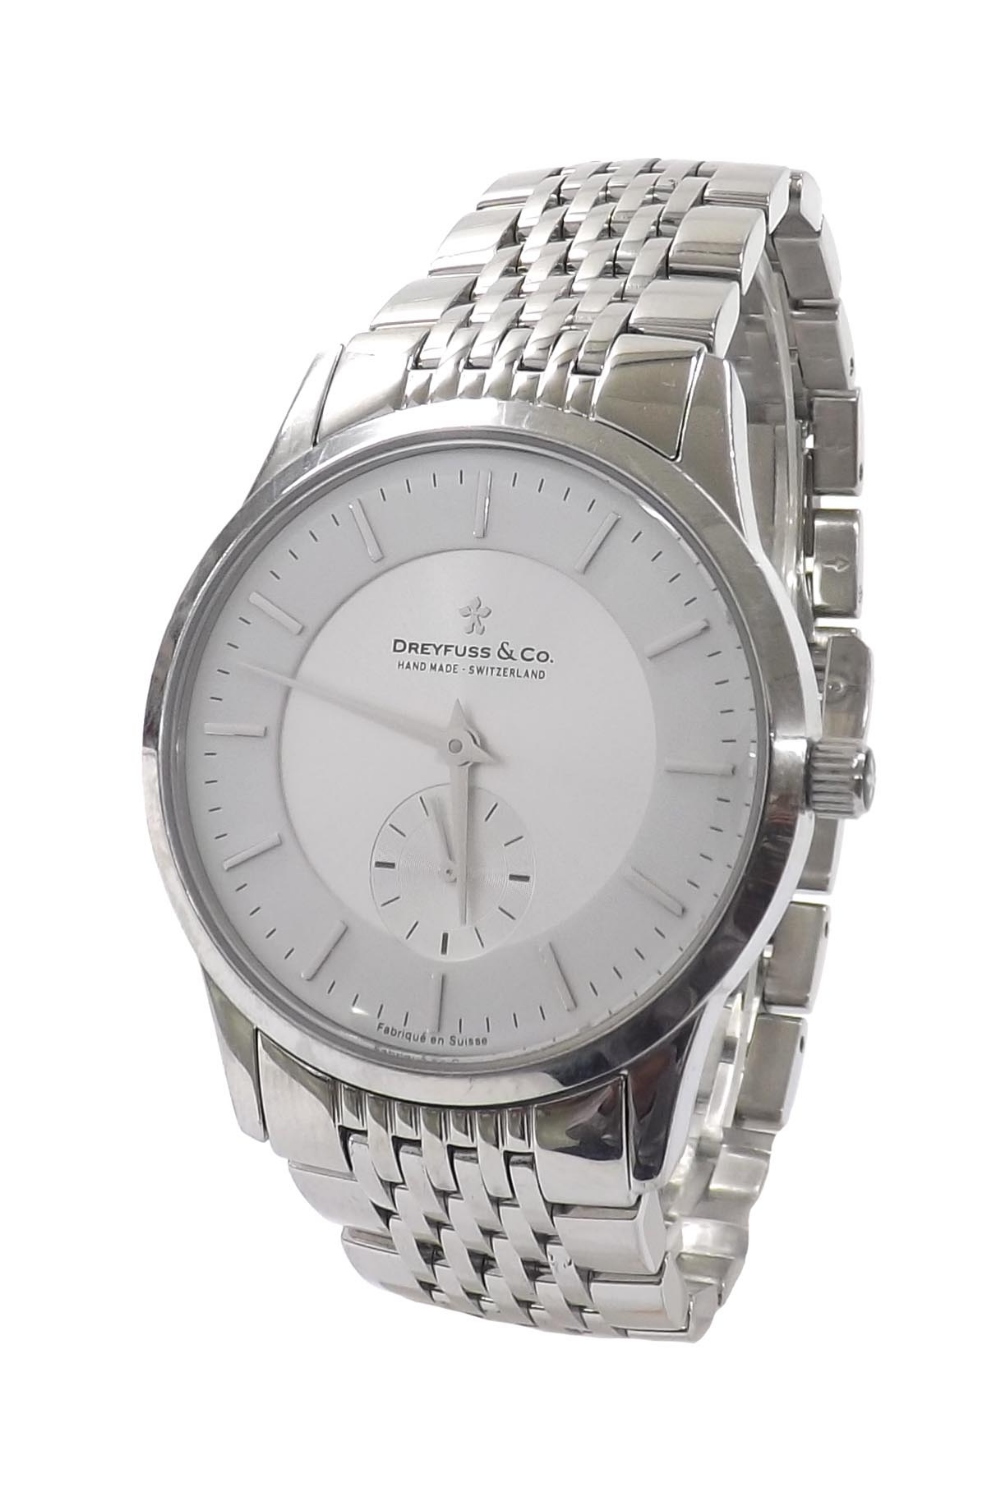 Dreyfuss & Co. Series 1946 stainless steel gentleman's bracelet watch, no. 8574, silvered dial